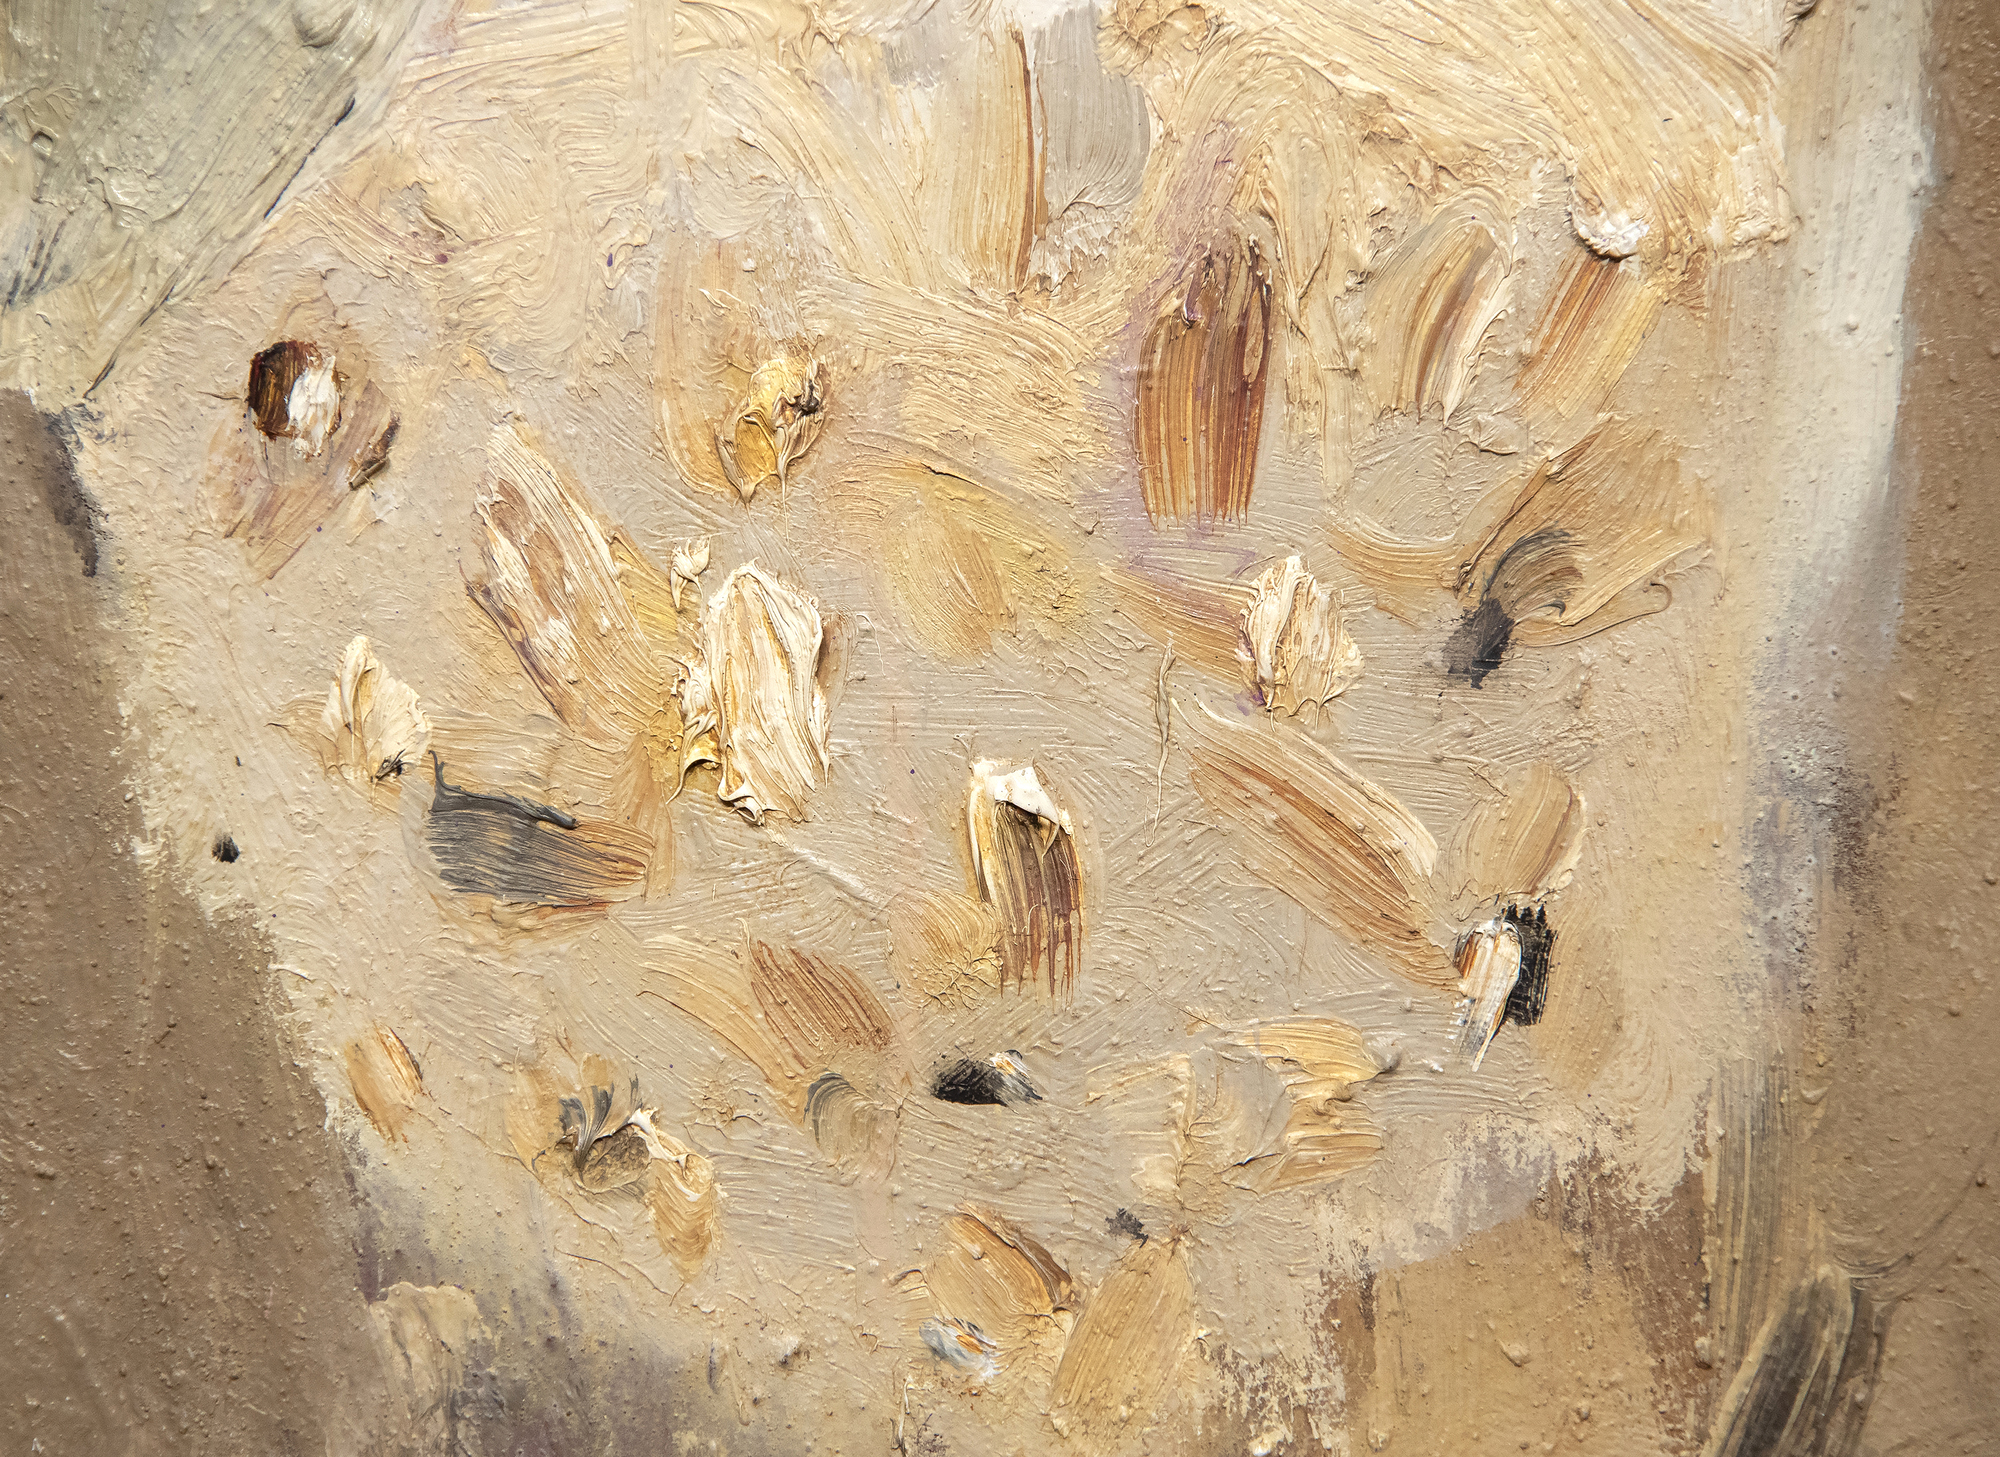 NATHAN OLIVEIRA - Maske - Acryl, Erde und Öl auf Leinwand - 66 x 54 Zoll.